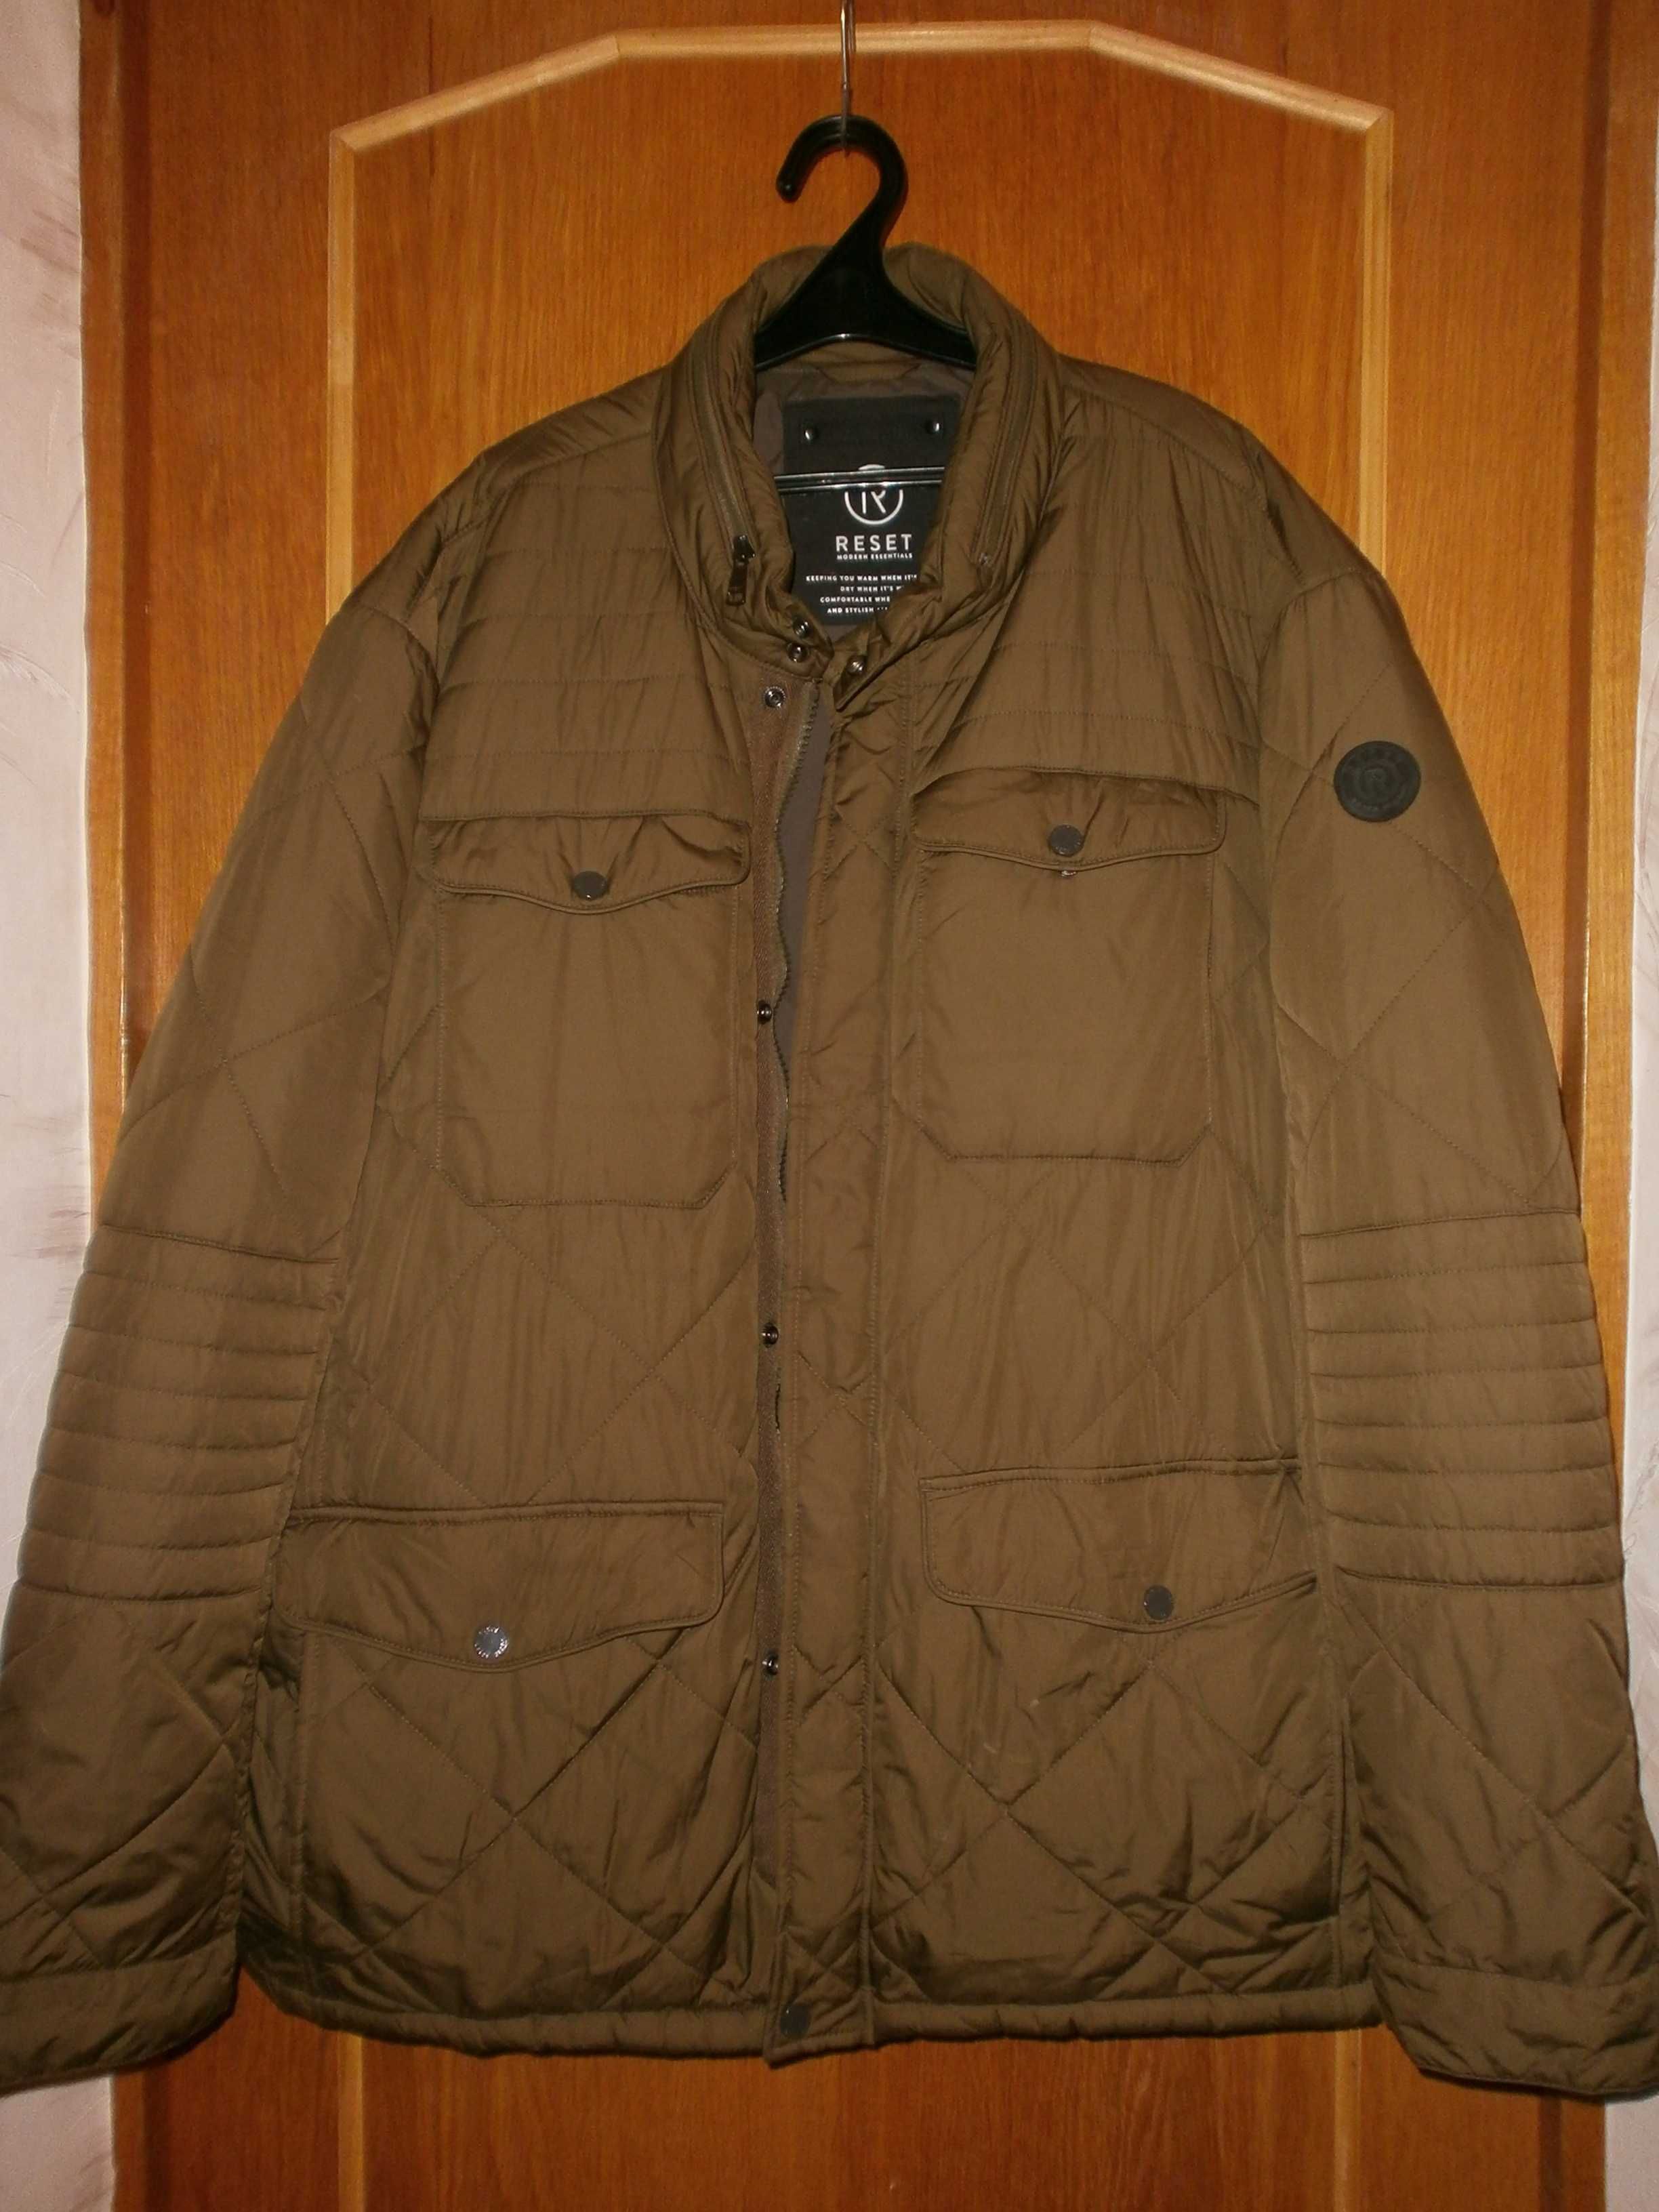 Большой размер. Куртка Reset, олива, разм. 5XL, наш 70. ПОГ-80 см.